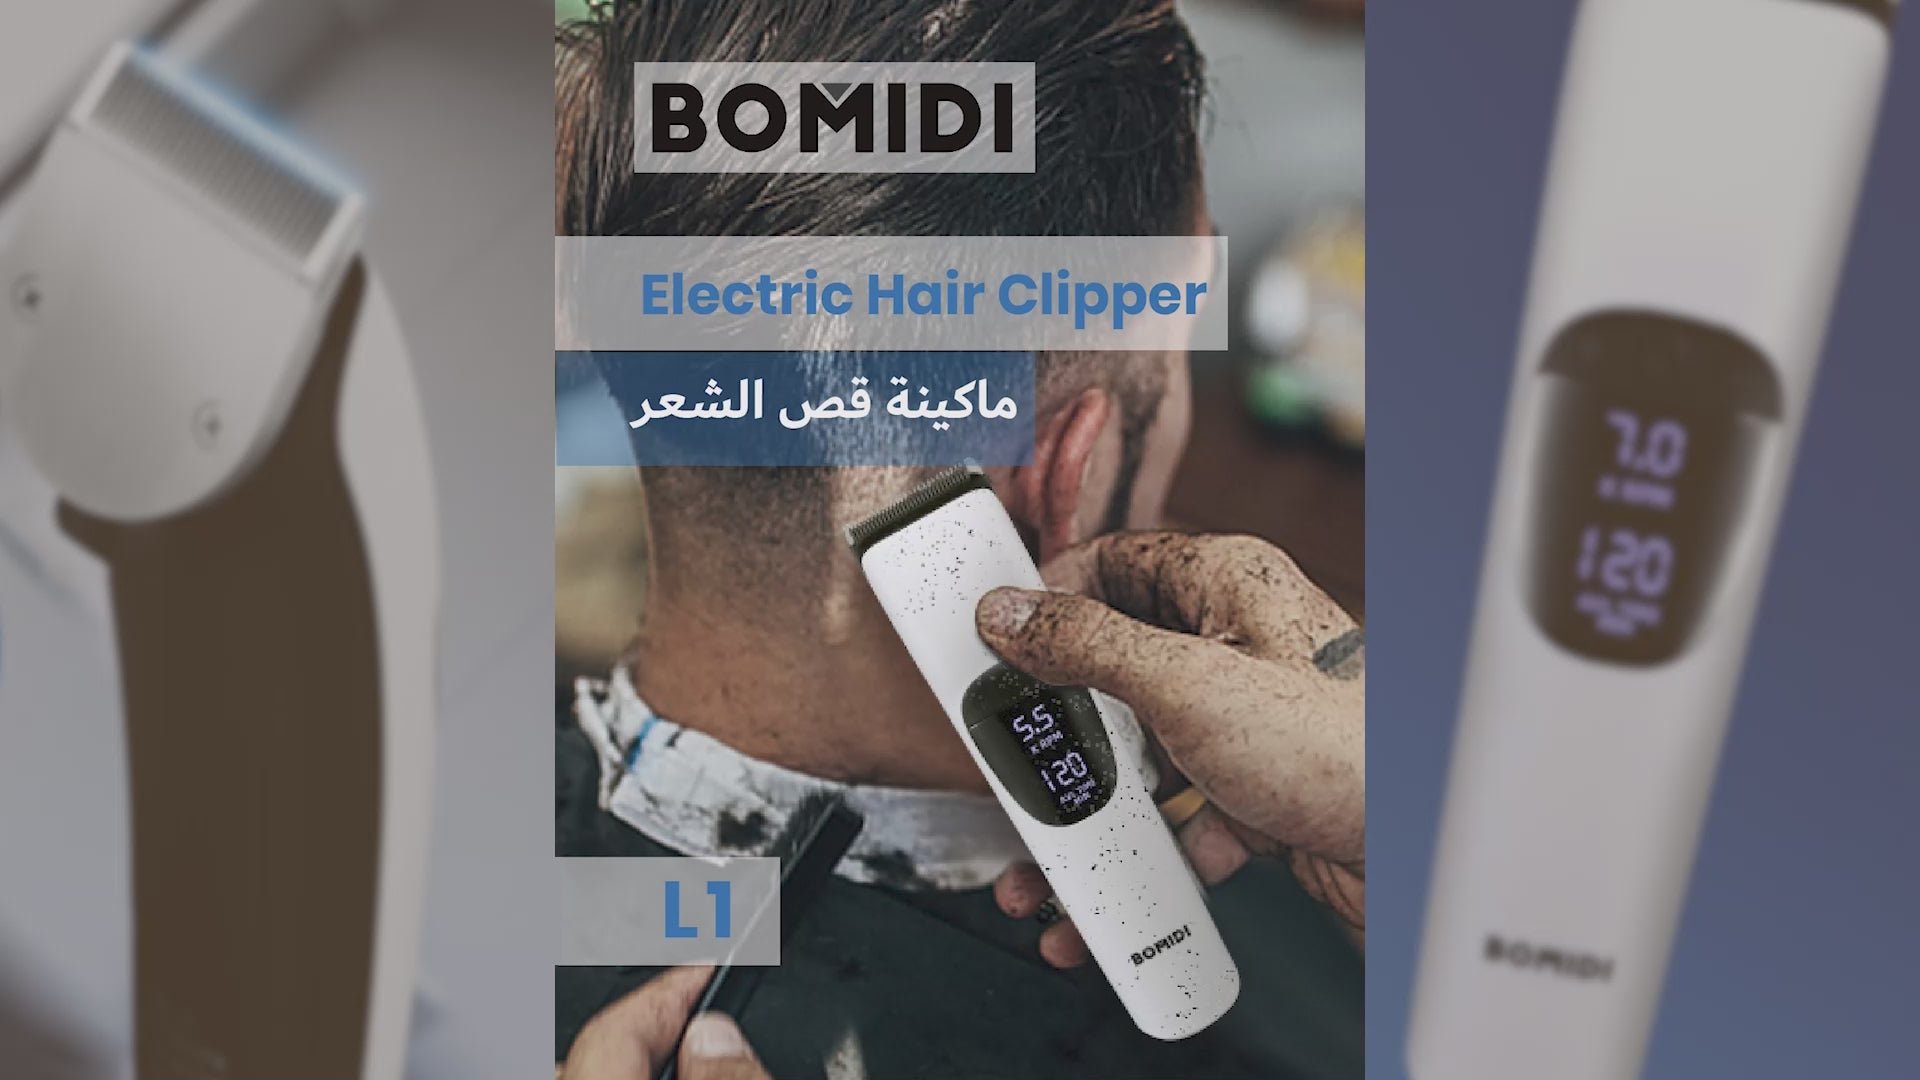 Bomidi L1 Electric Hair Clipper LCD Display Rechargeable Razor - Black